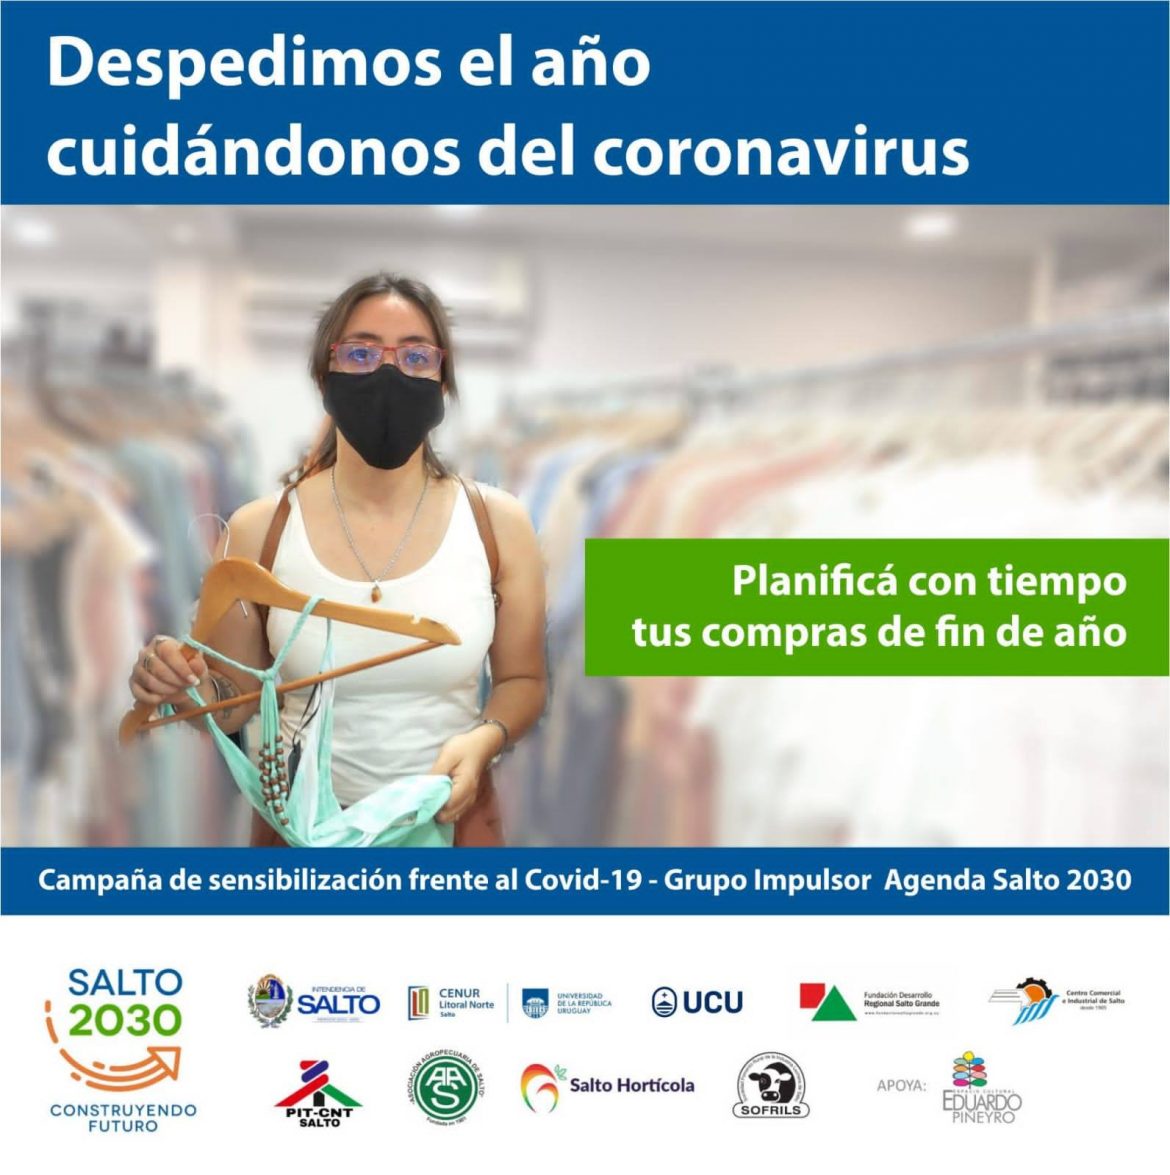 Grupo Impulsor de Agenda Salto 2030 presentó una campaña de sensibilización por coronavirus.